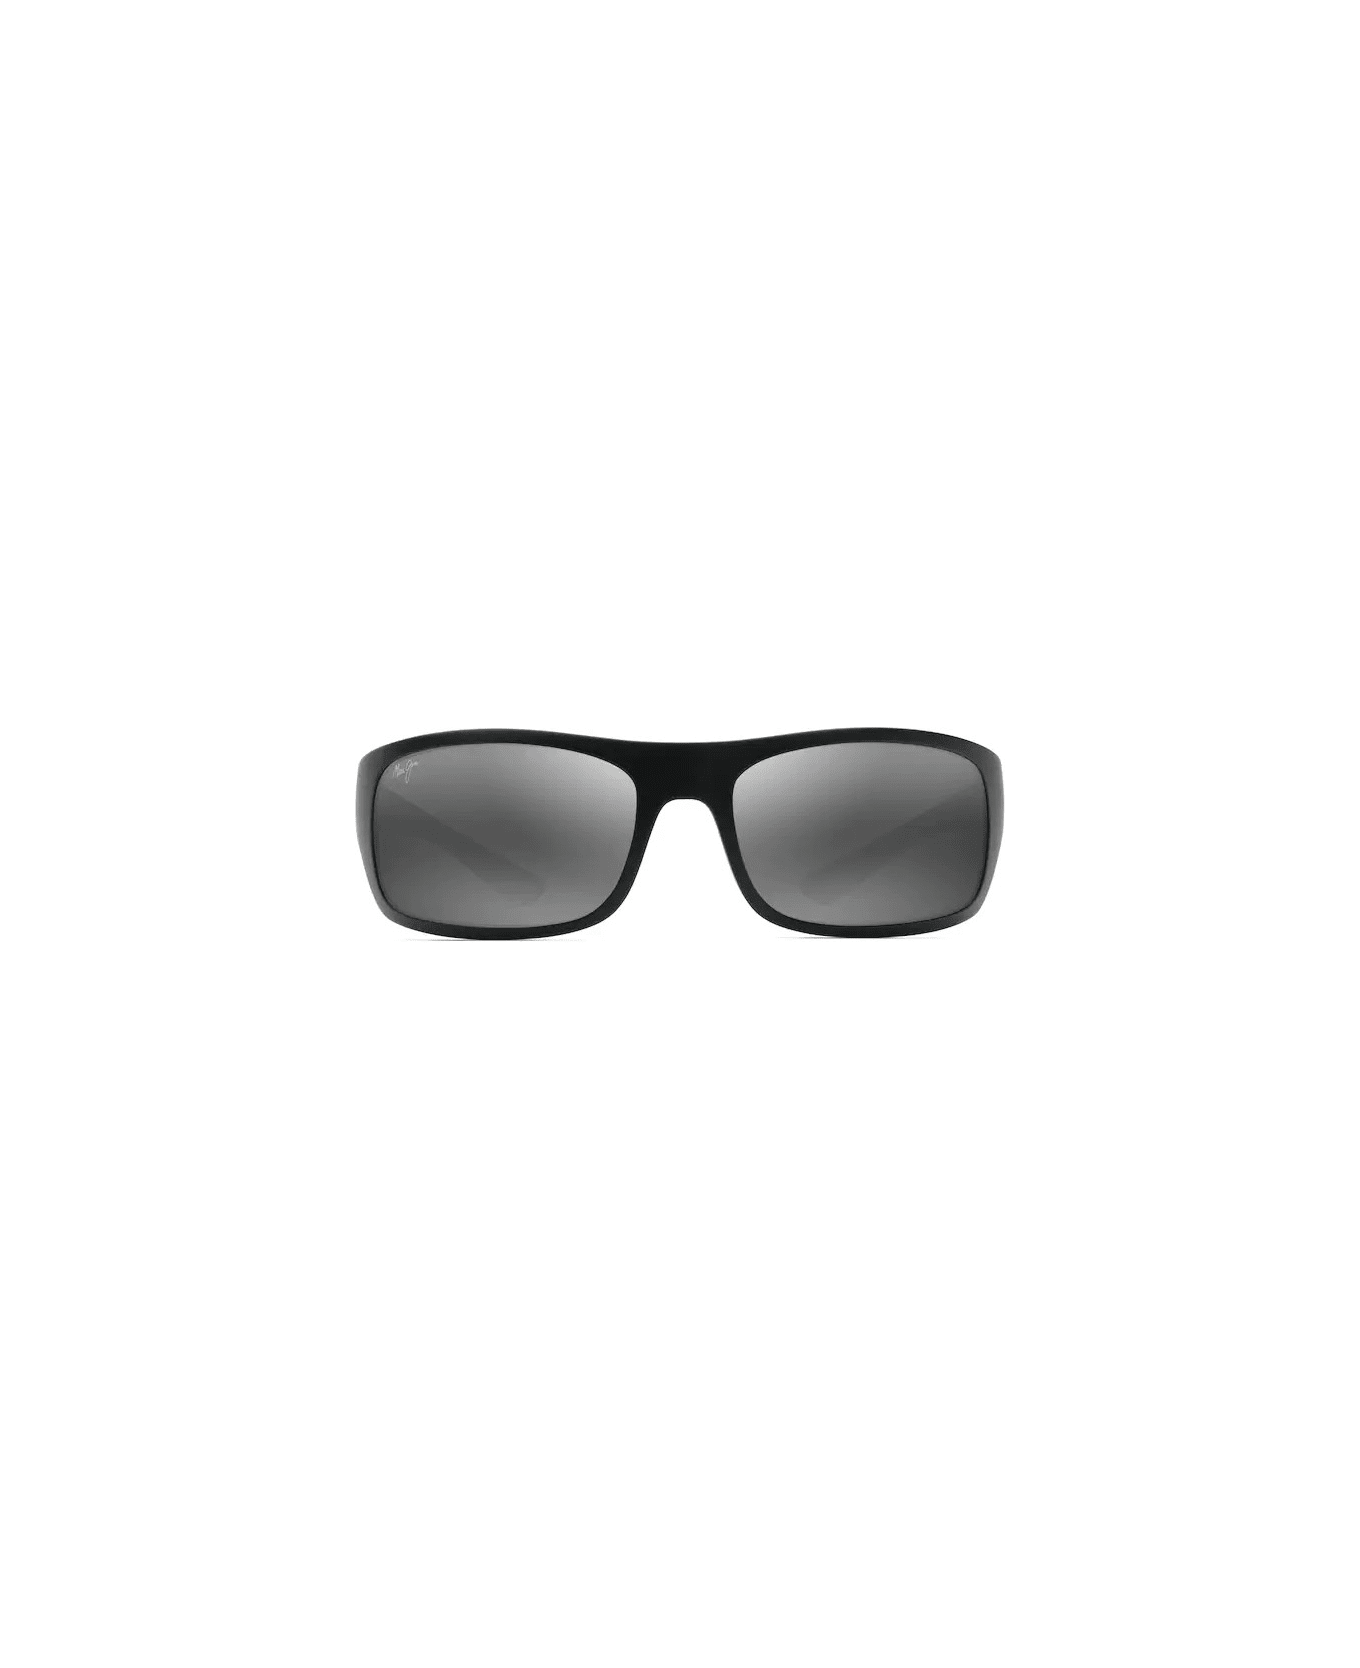 Maui Jim MJ440-2M Sunglasses - Nero lente grigia サングラス